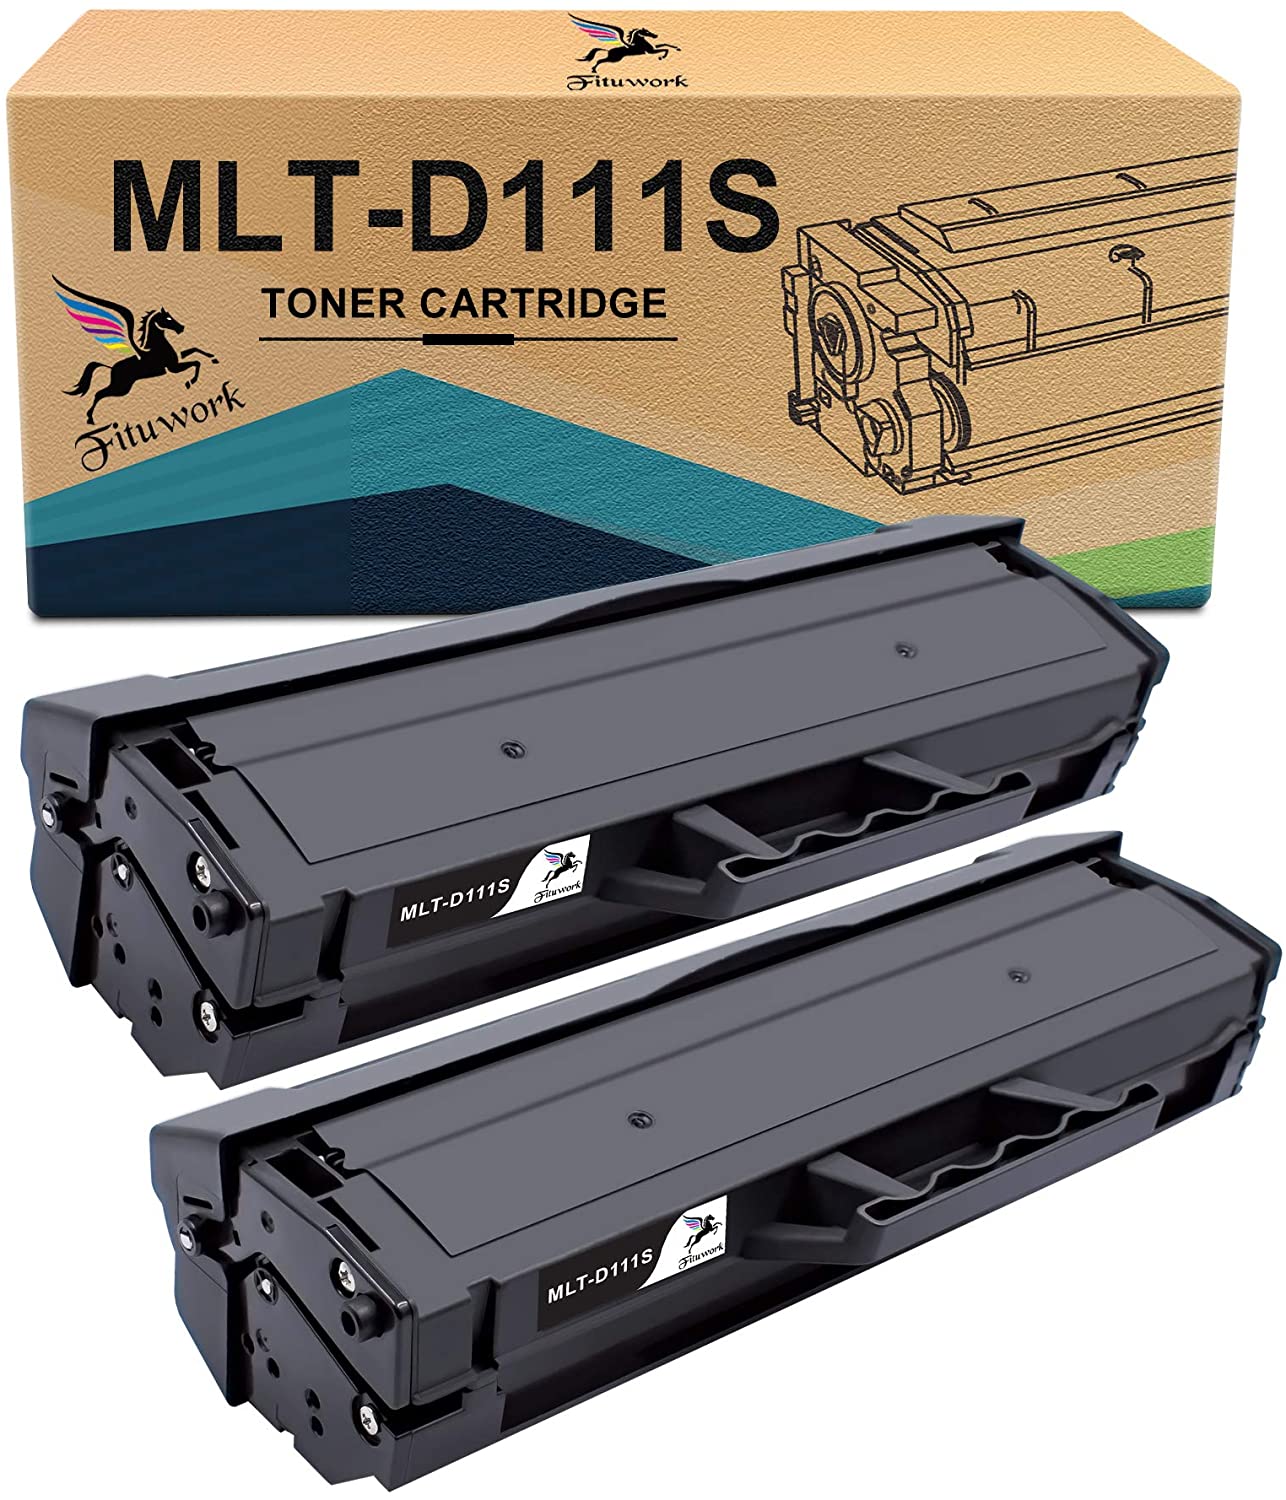 Fituwork 1Black Reemplazo Compatible para Samsung MLT-D111S Cartucho de Toner Trabajado para Samsung Xpress M2070 M2070W M2020 M2020W M2022 M2022W M2070FW 1B - 1Pack 